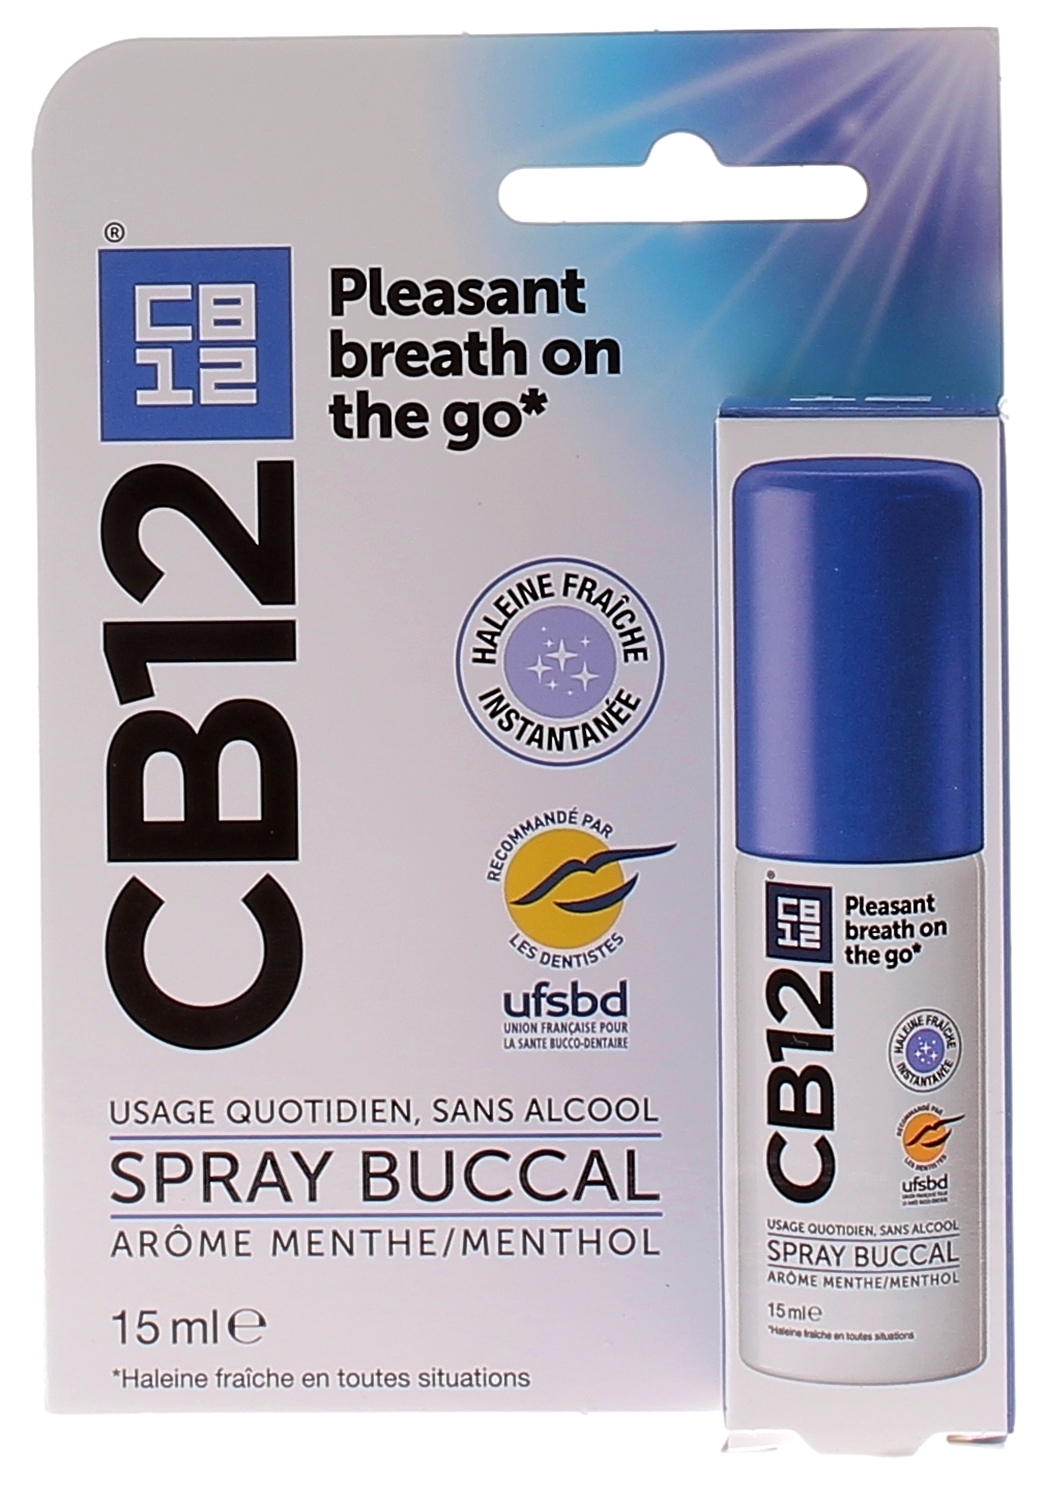 CB12 SPRAY MENTHE 15ML - Pharmacie Cap3000